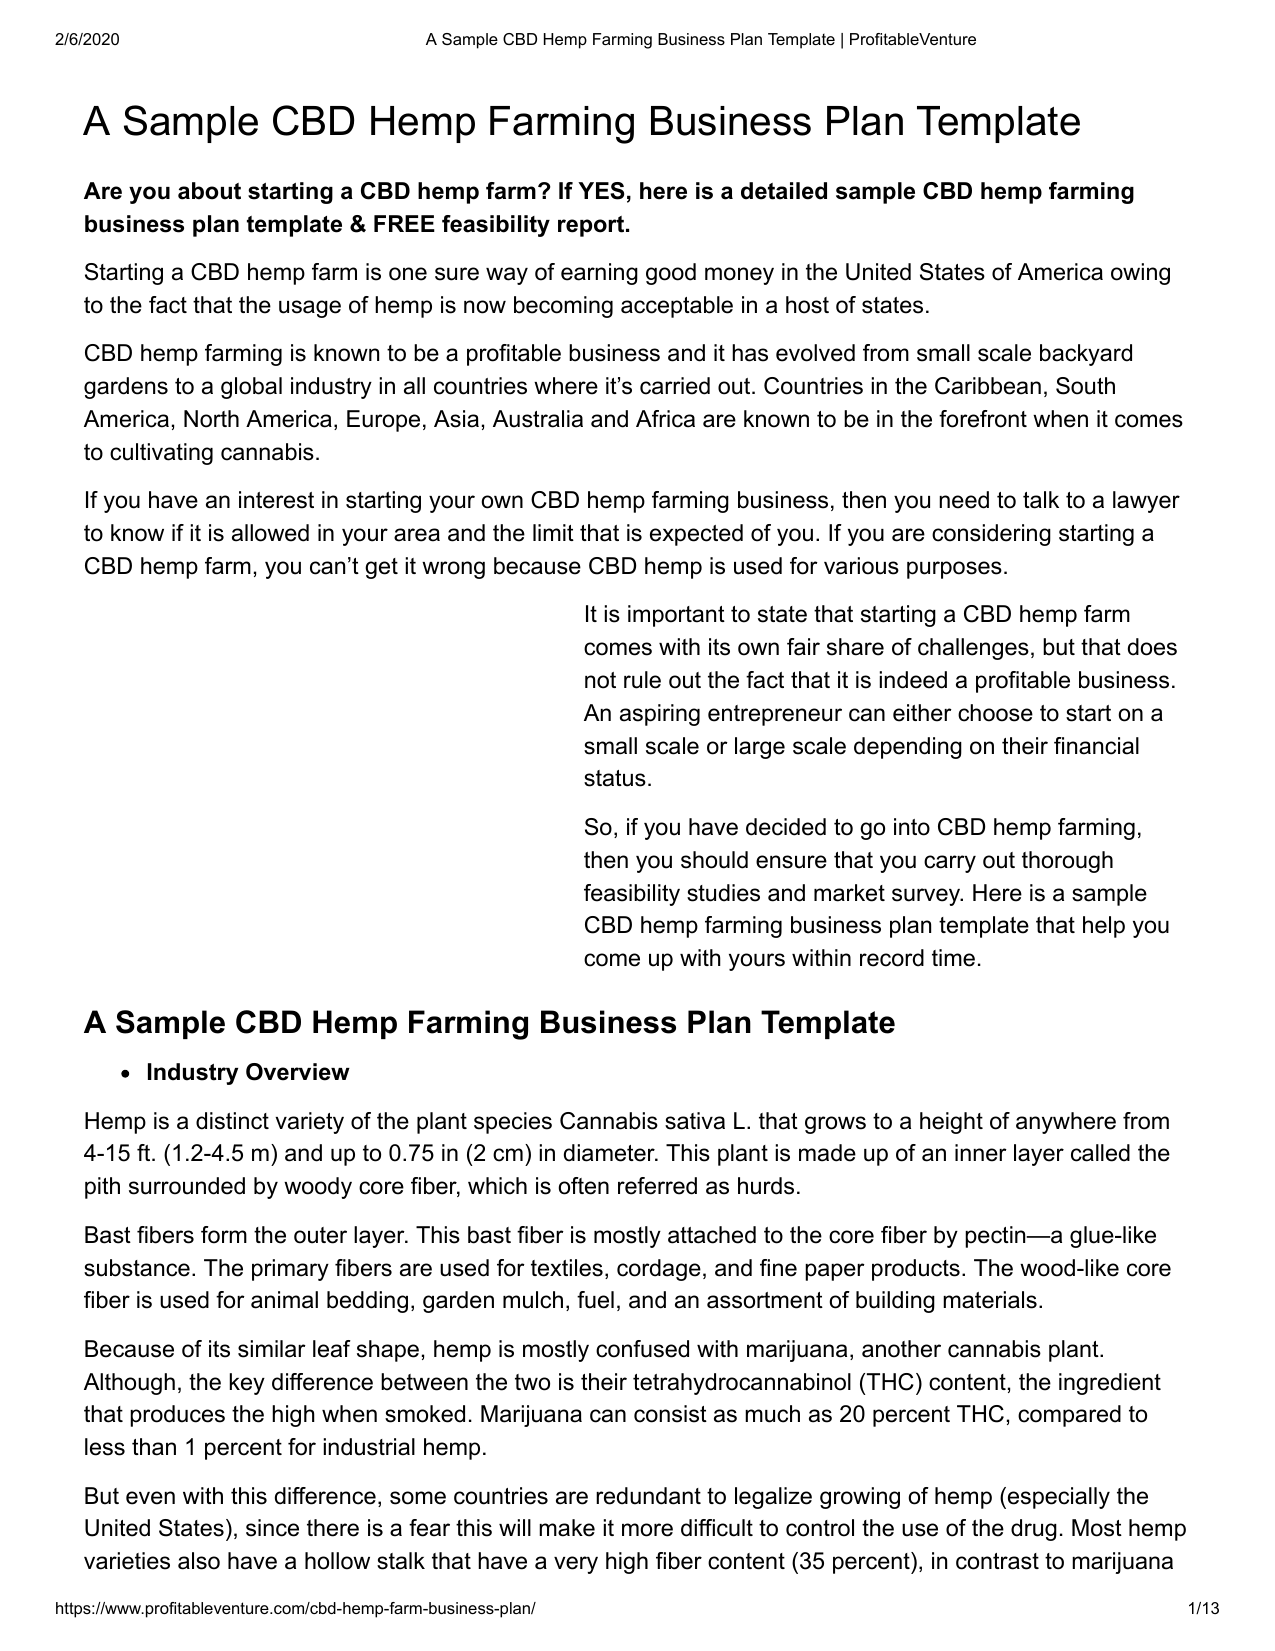 A Sample CBD Hemp Farming Business Plan Template Within Agriculture Business Plan Template Free